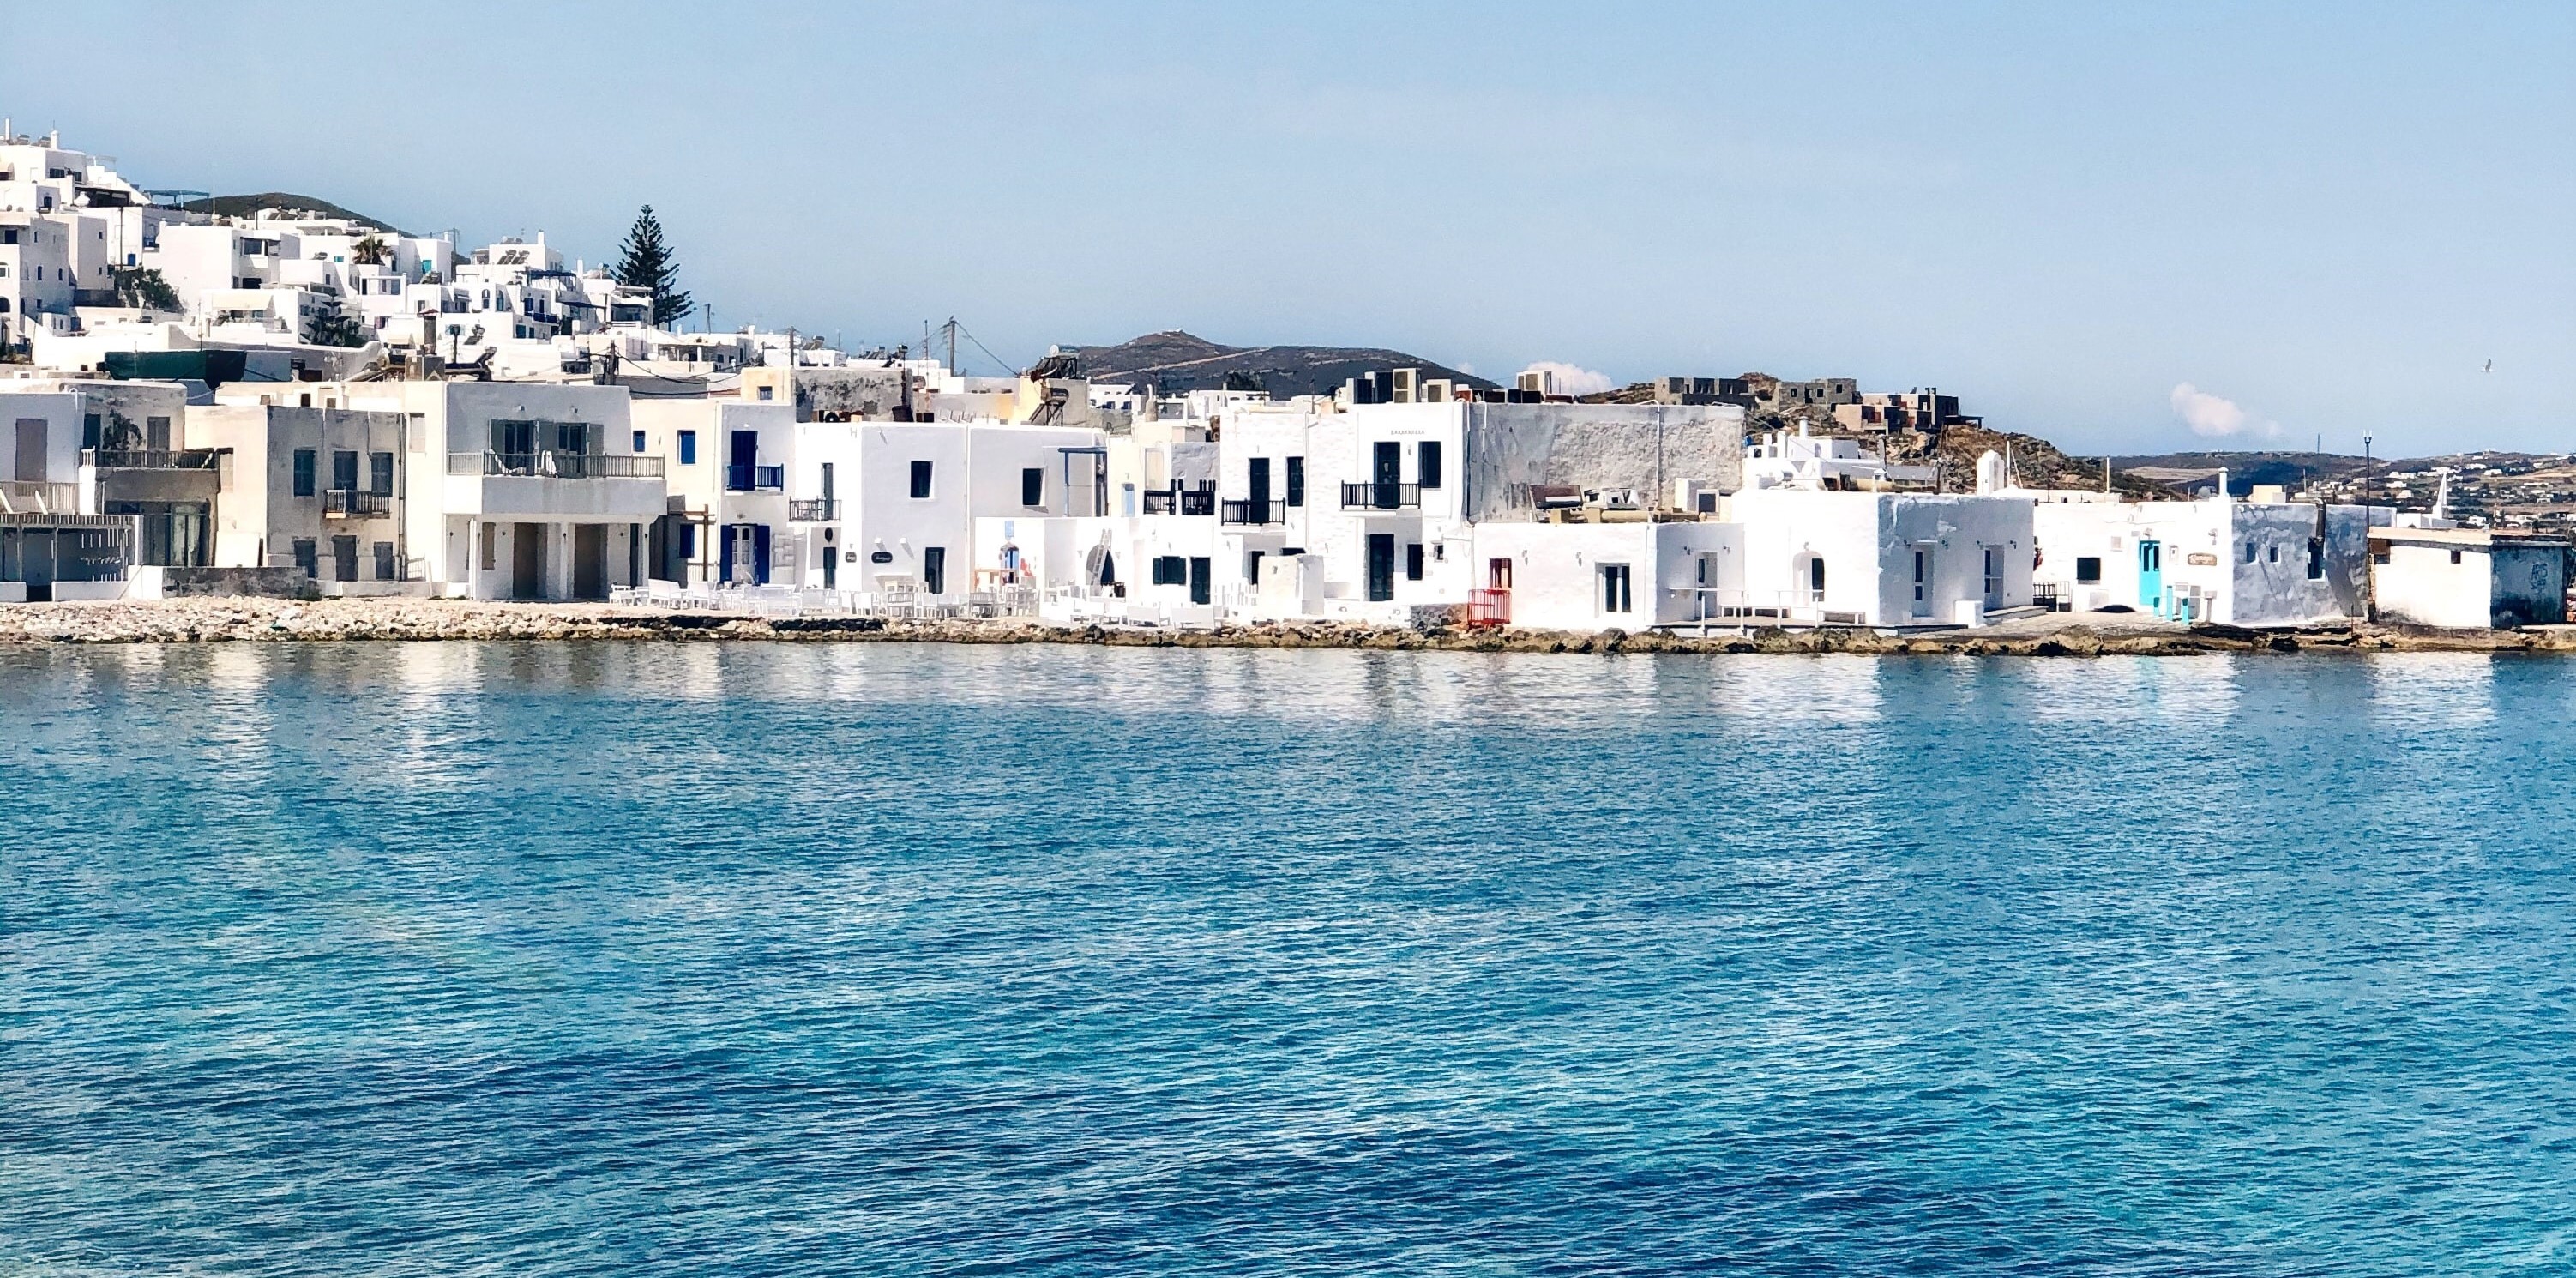 Flottiglia BeFree Grecia Cicladi: da Atene a Mykonos